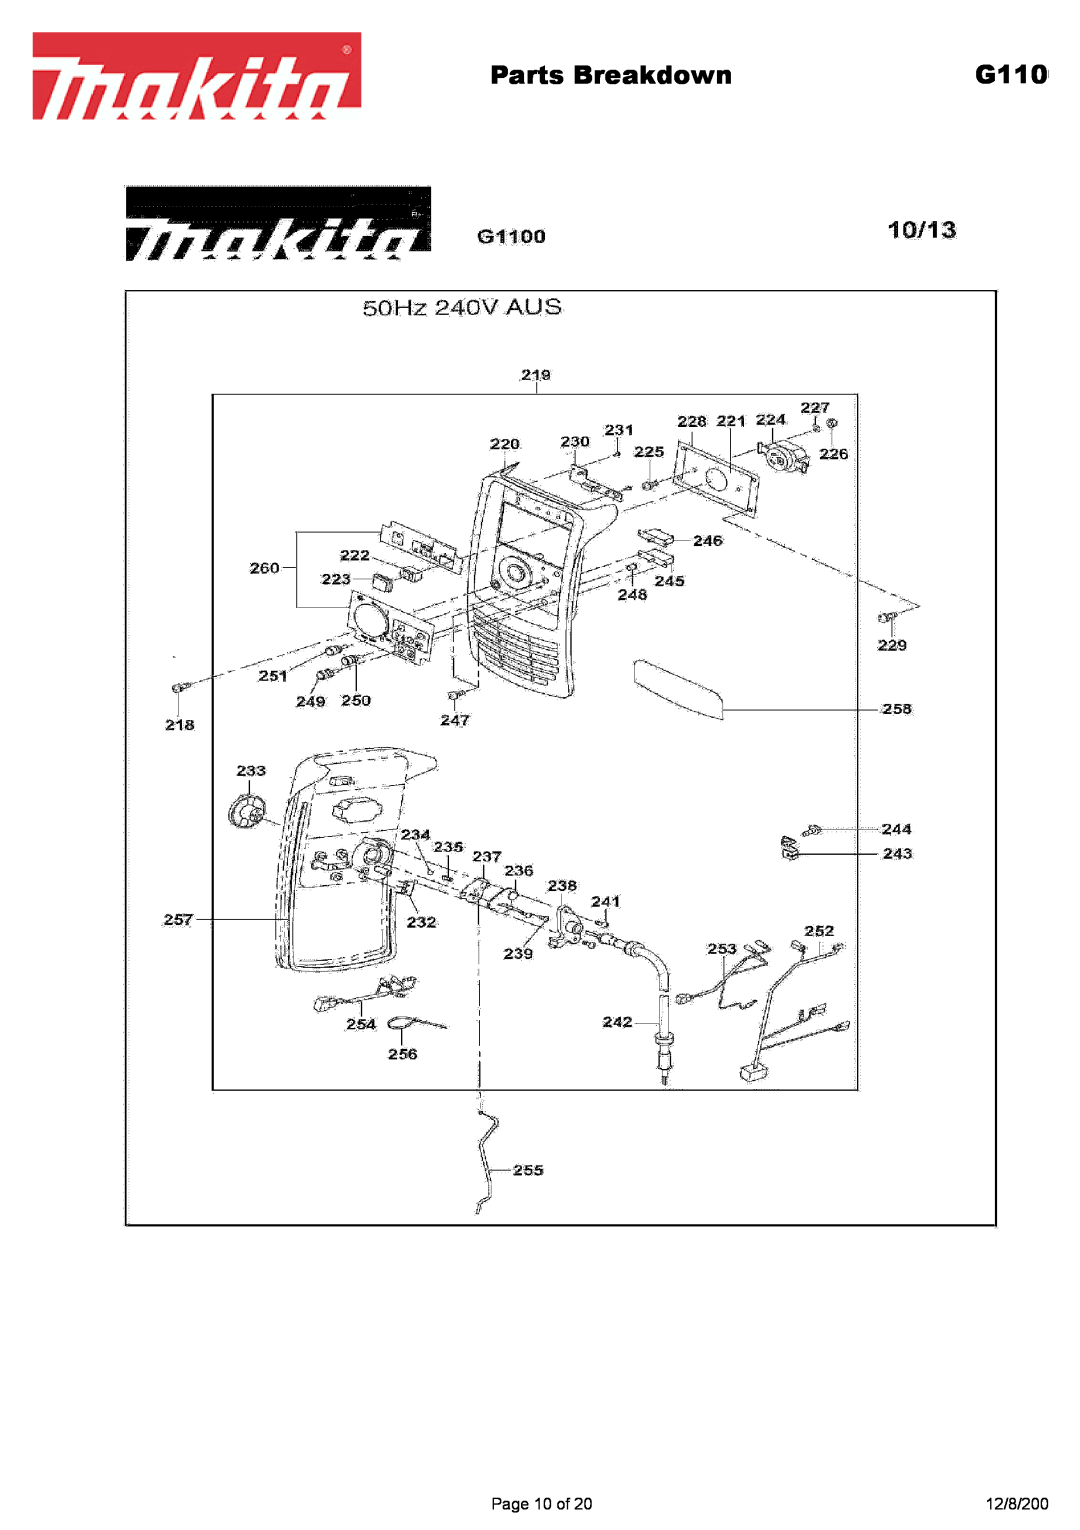 Makita G1700i manual Parts Breakdown, G110, Page 10 of, 12/8/200 